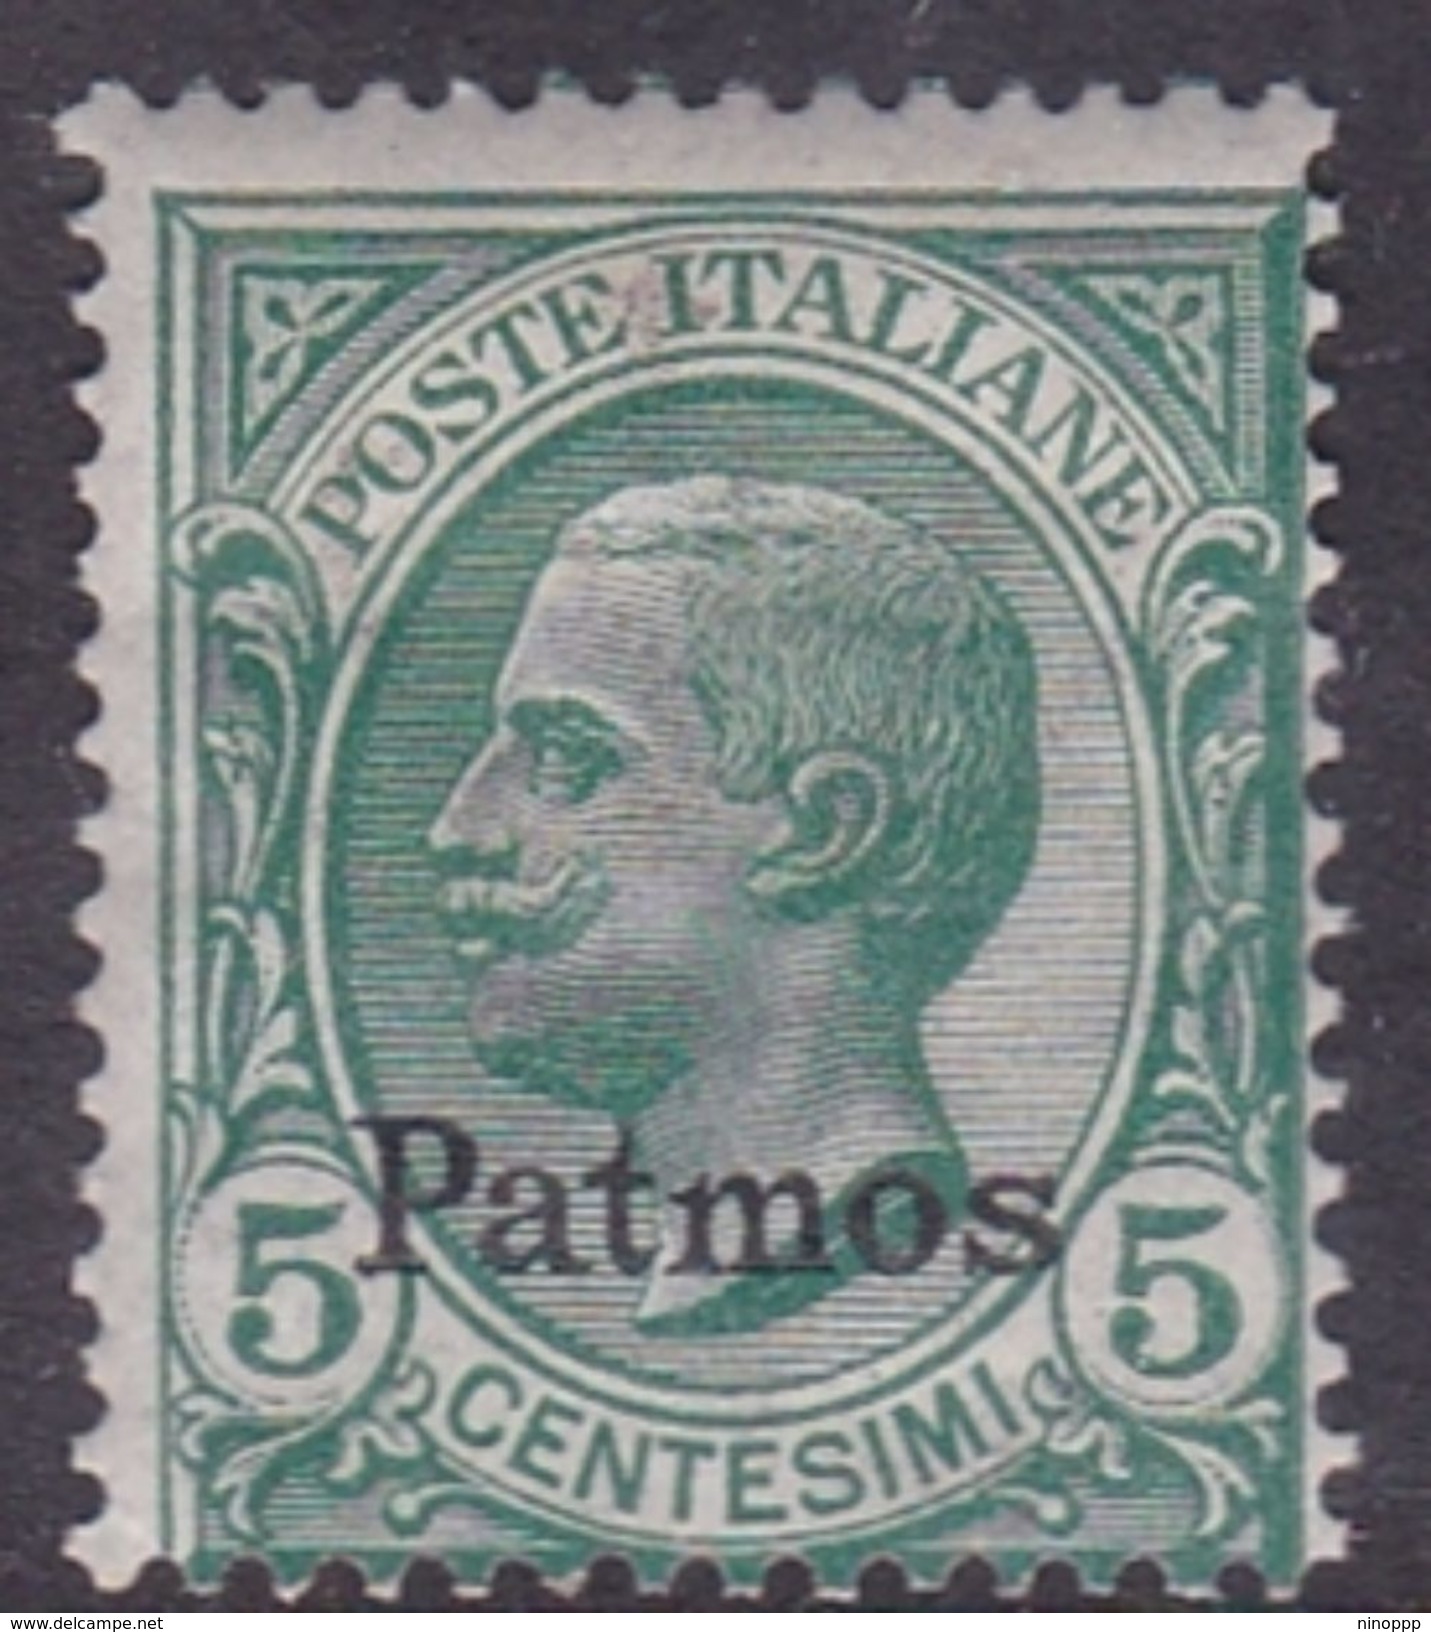 Italy-Colonies And Territories-Aegean-Patmo S 2  1912  5c Green MH - Aegean (Patmo)